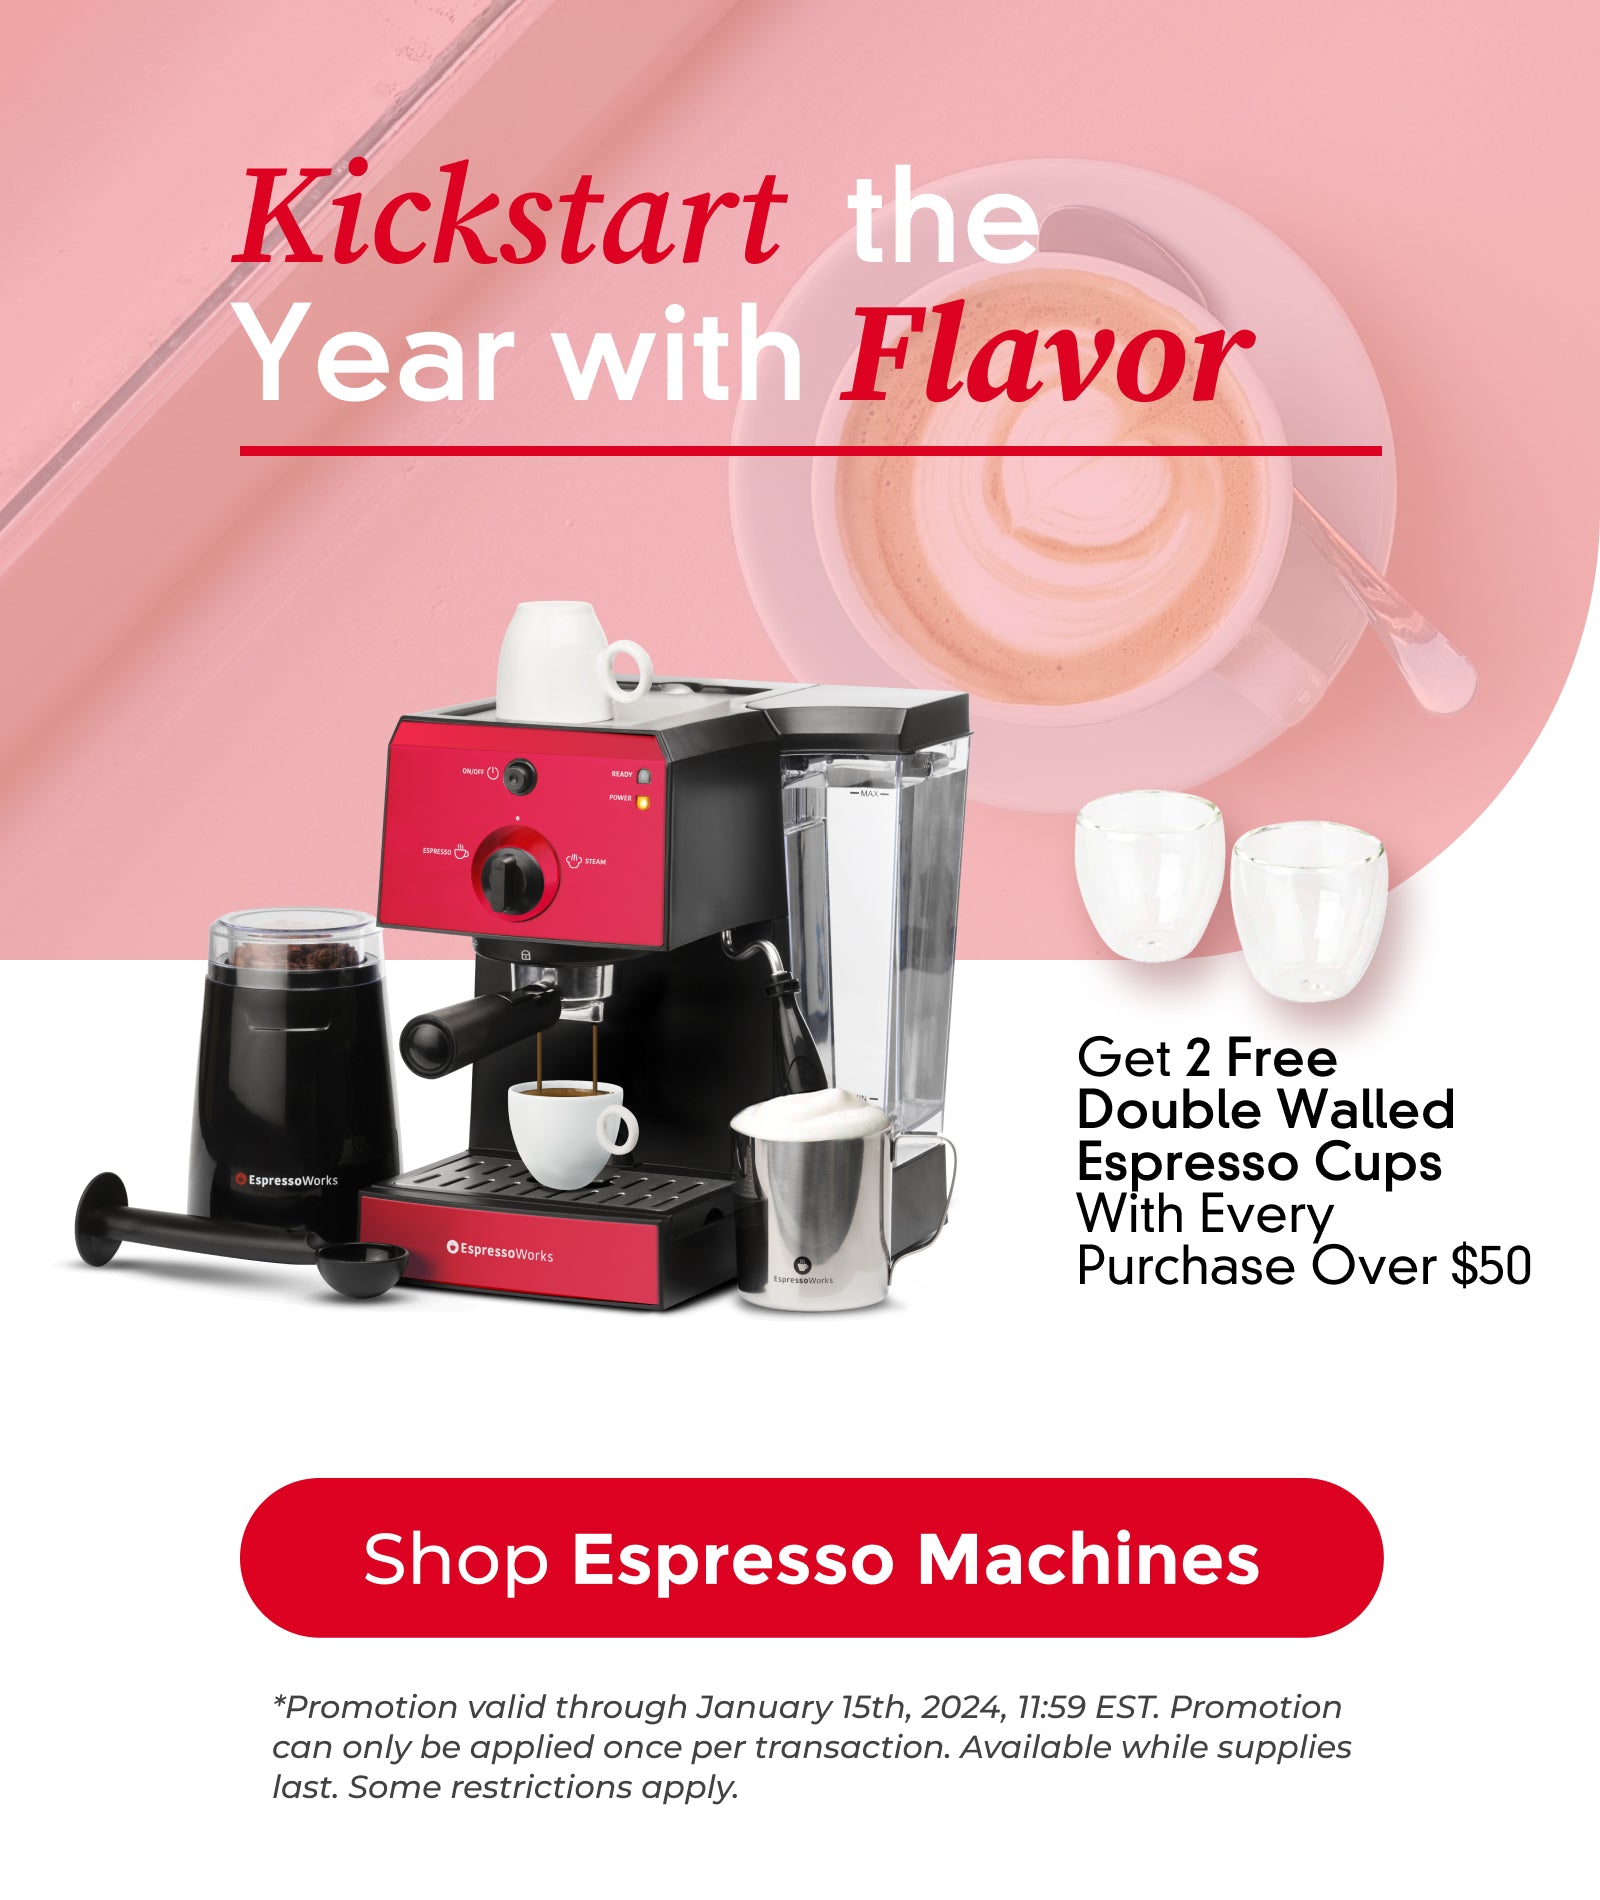 All-In-One Espresso & Cappuccino Machines (BEST OF 2023)